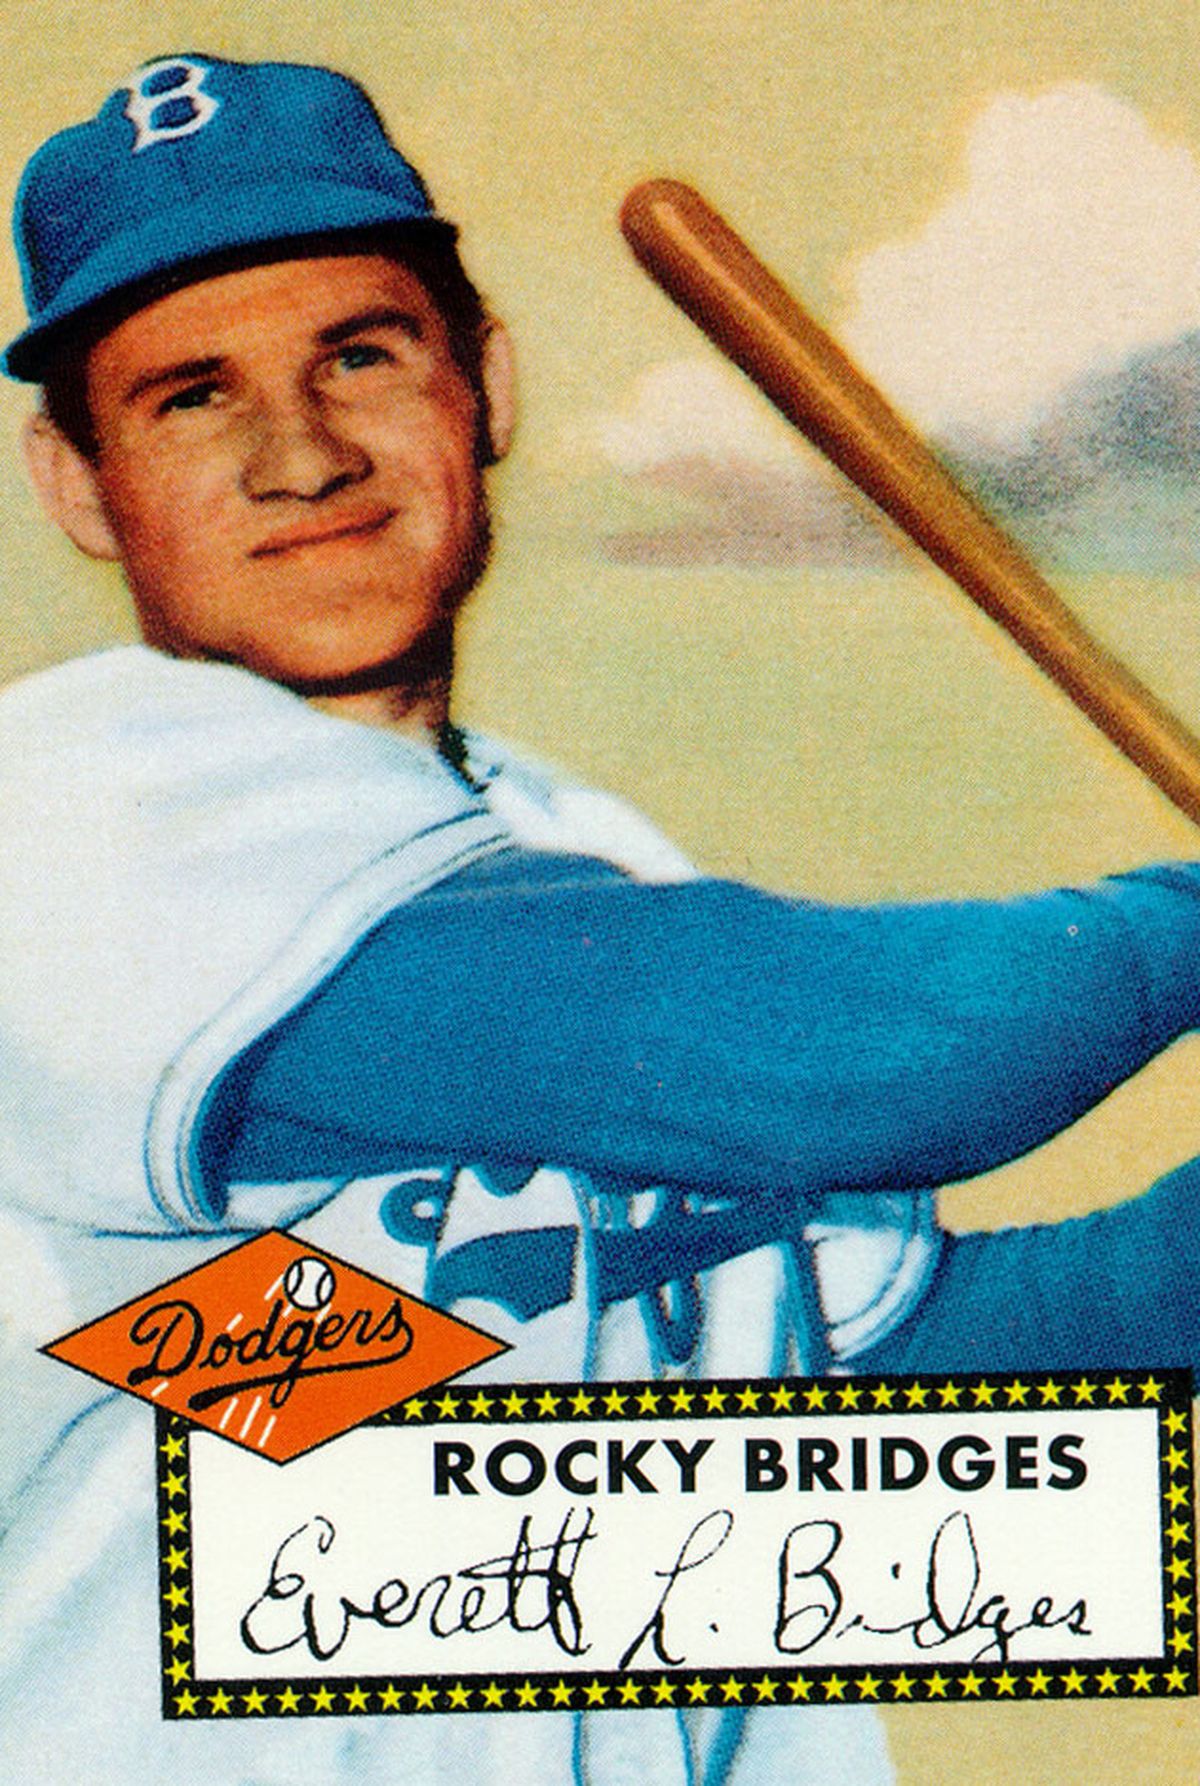 Everett ‘Rocky’ Bridges on a Topps Baseball card.